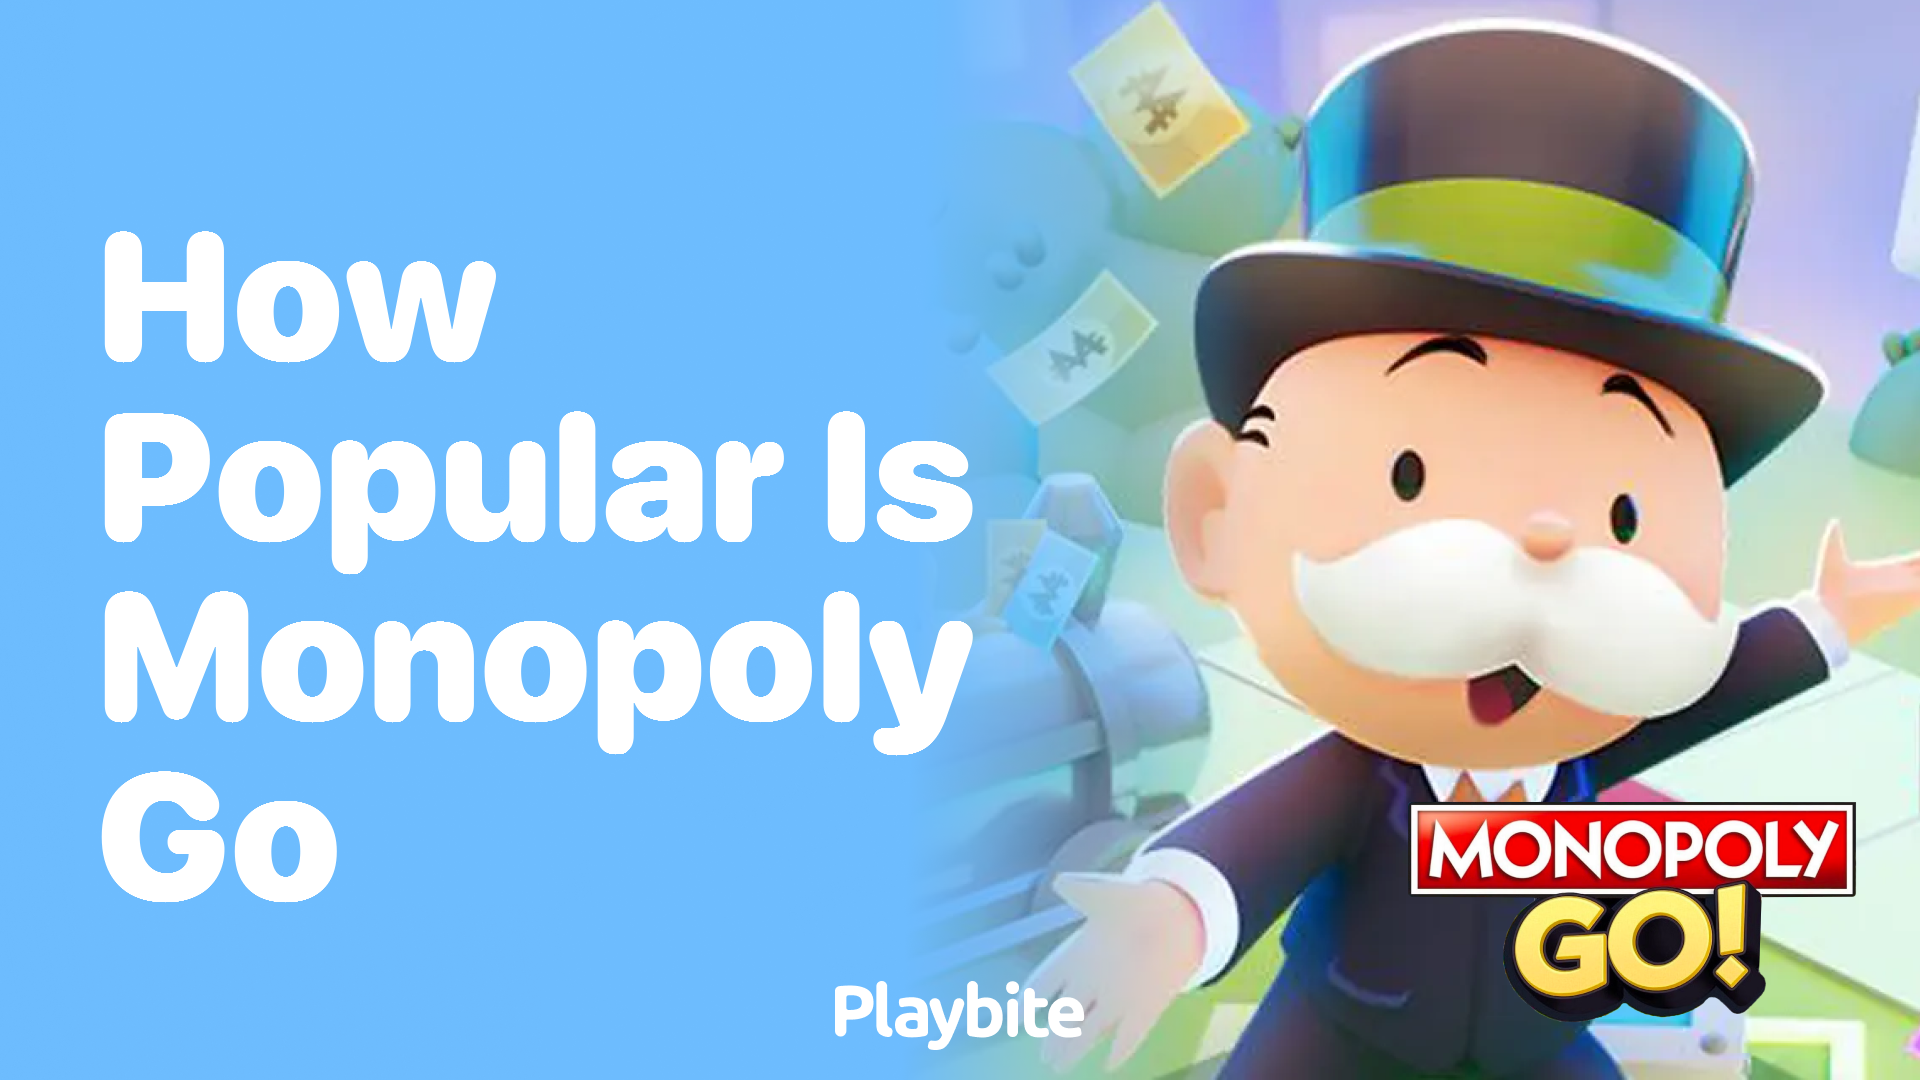 How Popular is Monopoly Go?